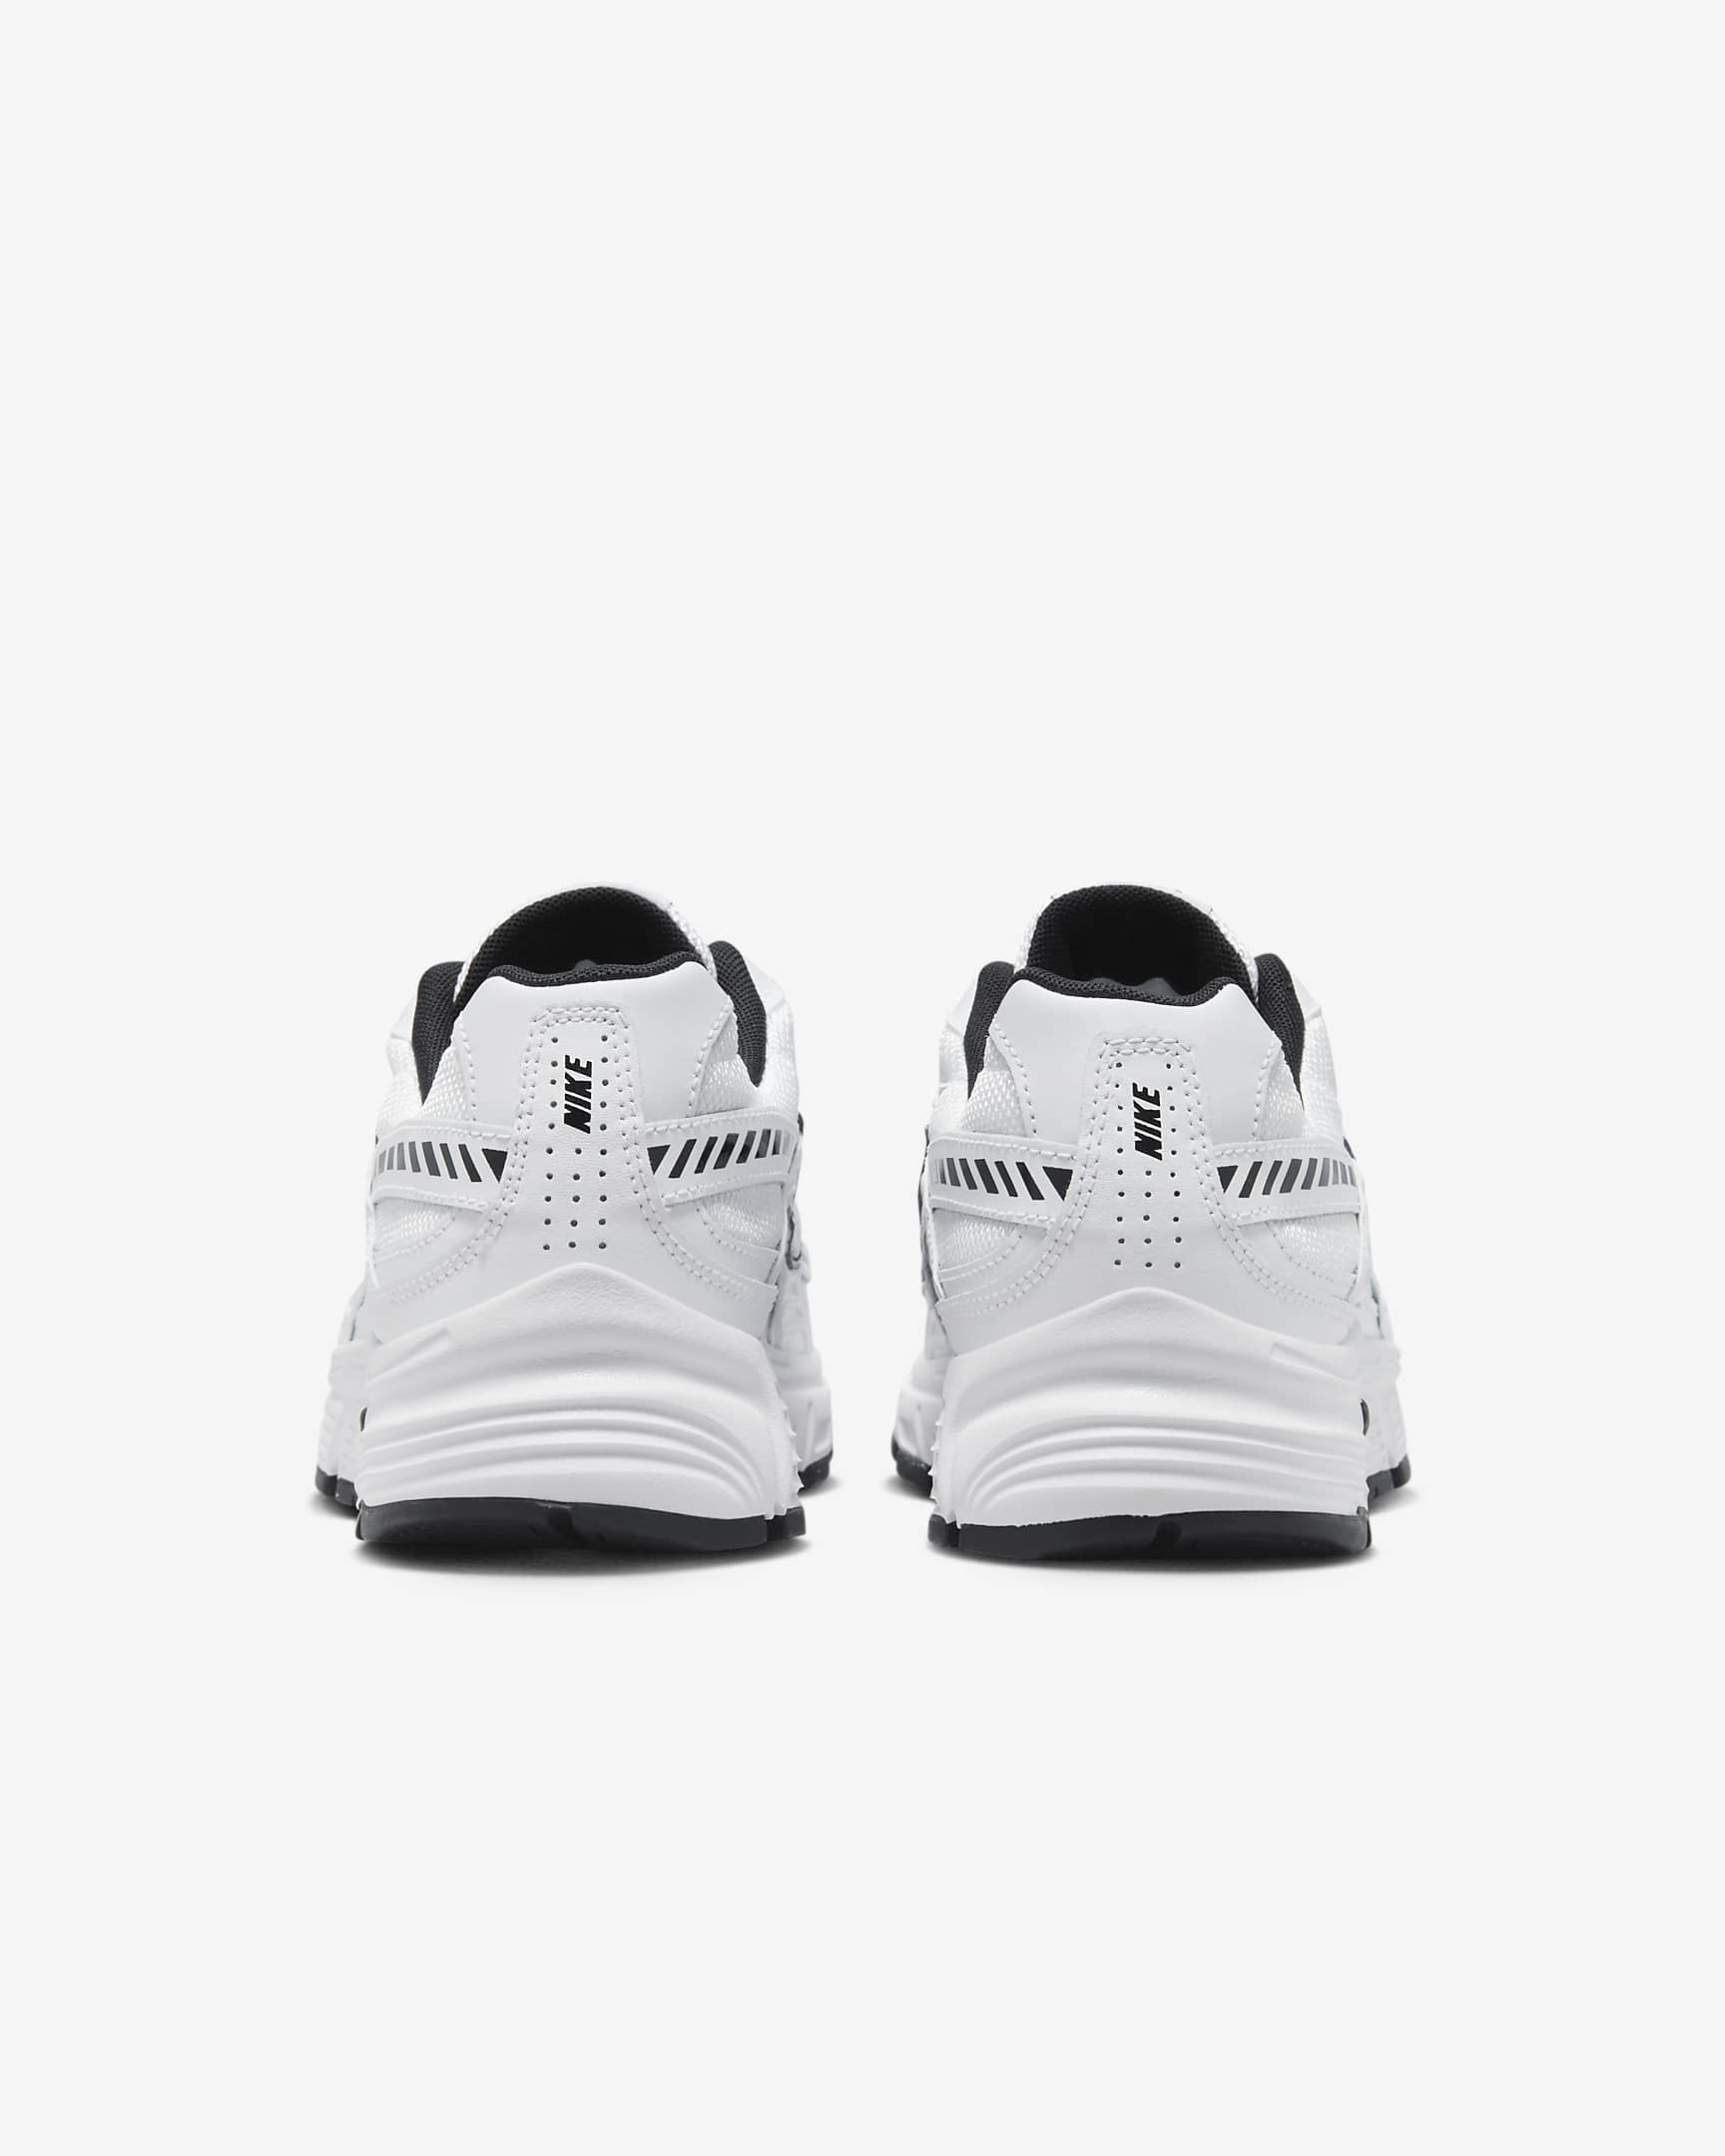 Nike Initiator Damenschuh - Weiß/Weiß/Schwarz/Metallic Silver